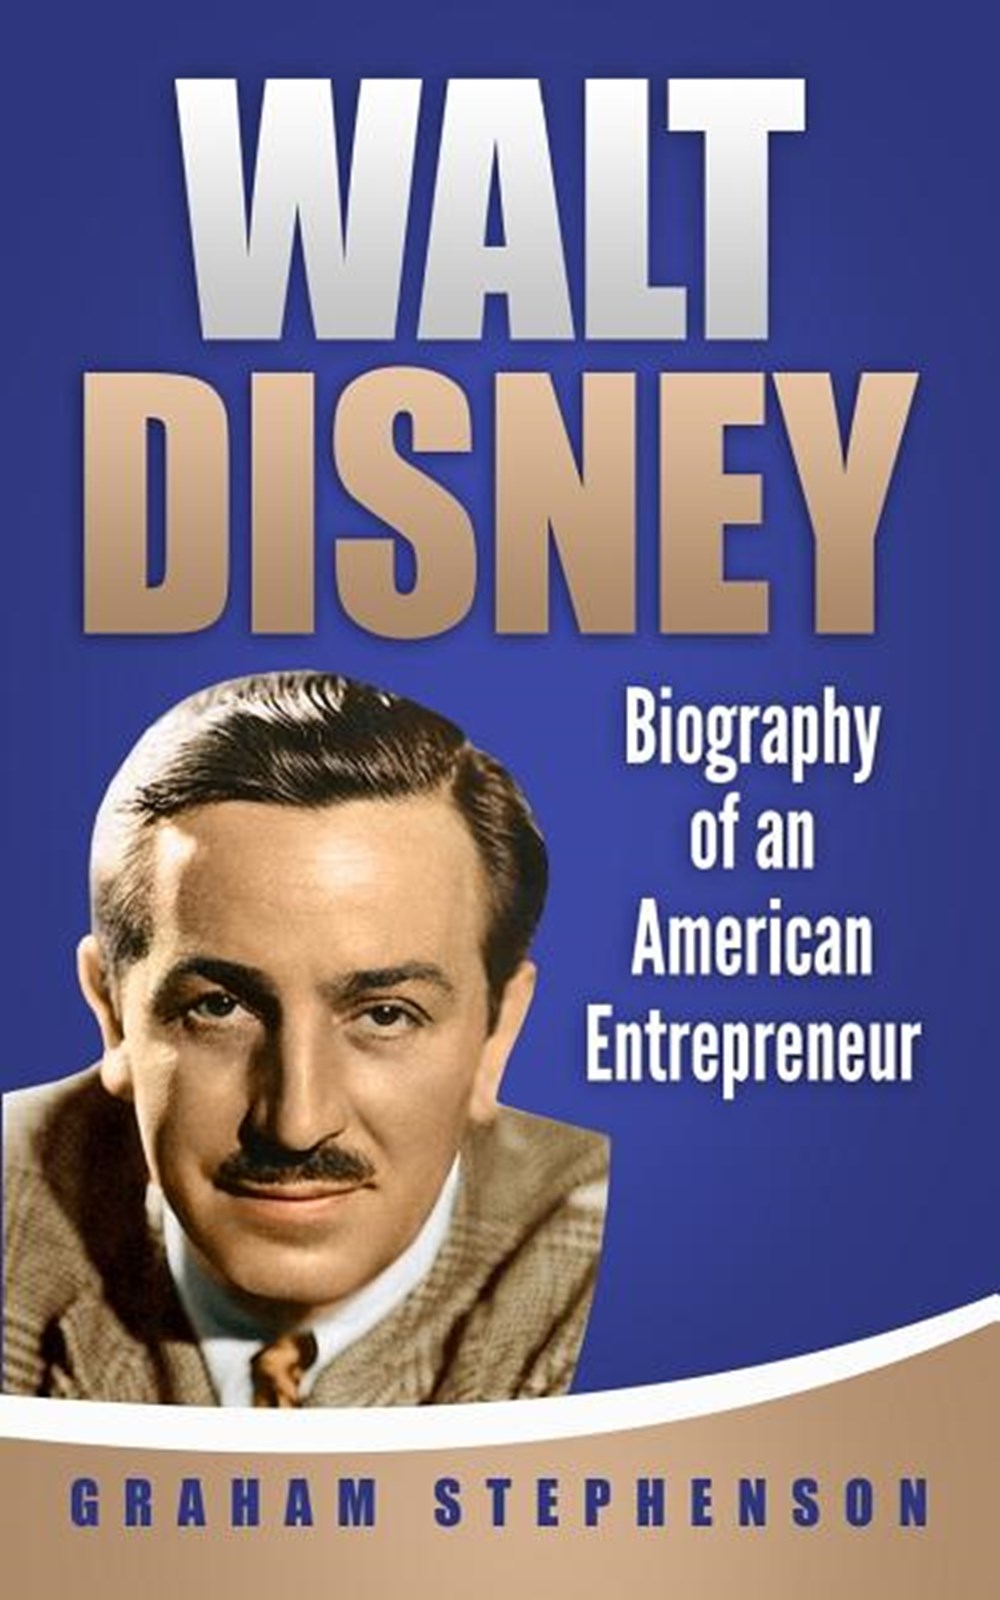 Walt Disney: Biography of an American Entrepreneur